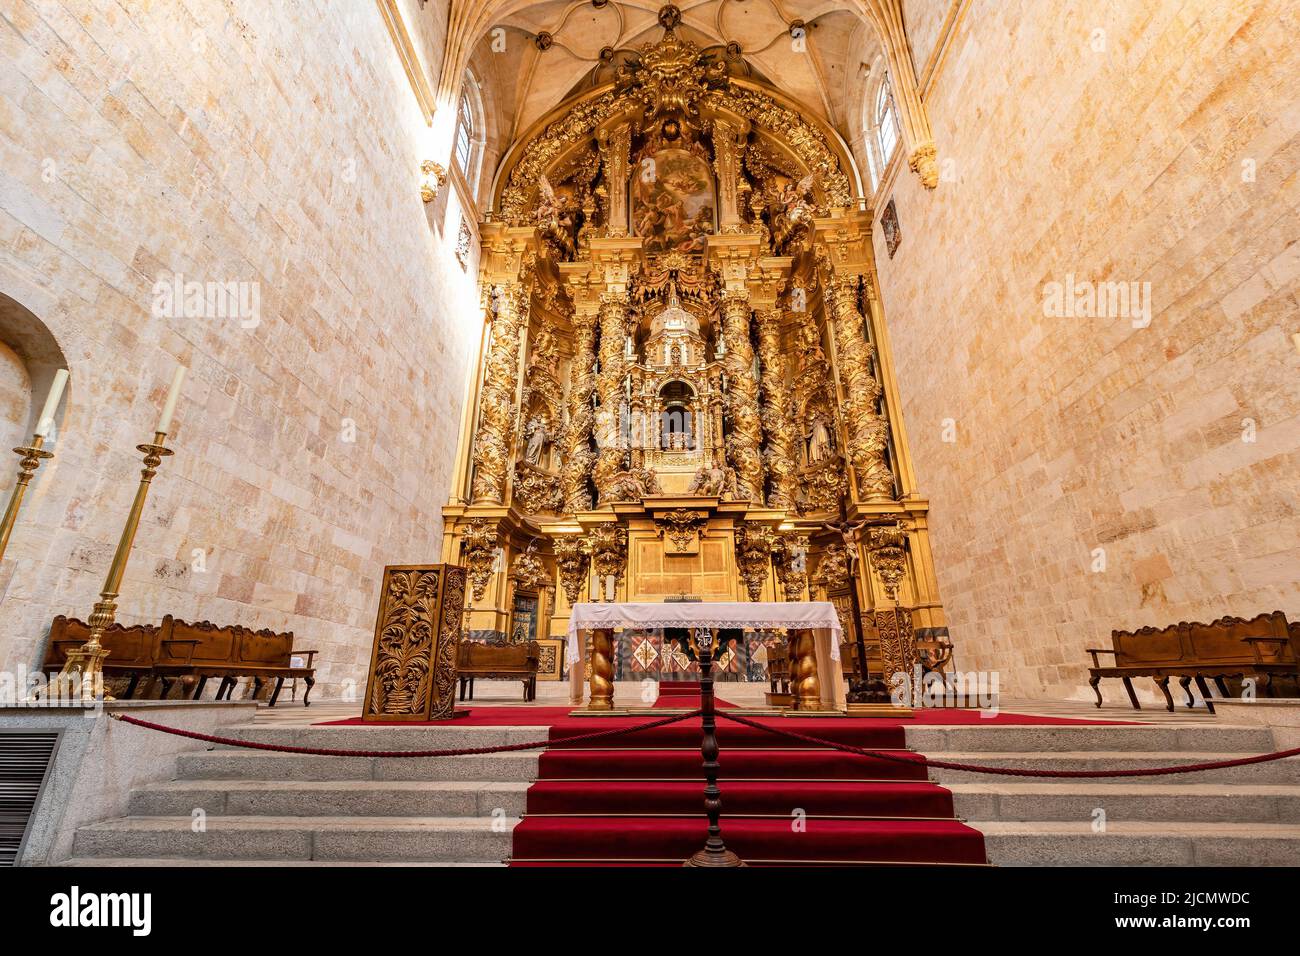 Salamanca - September 10, 2017: The main Altar and altarpiece of the Saint Esteban convent in Salamanca, Castile and Leon, Spain Stock Photo